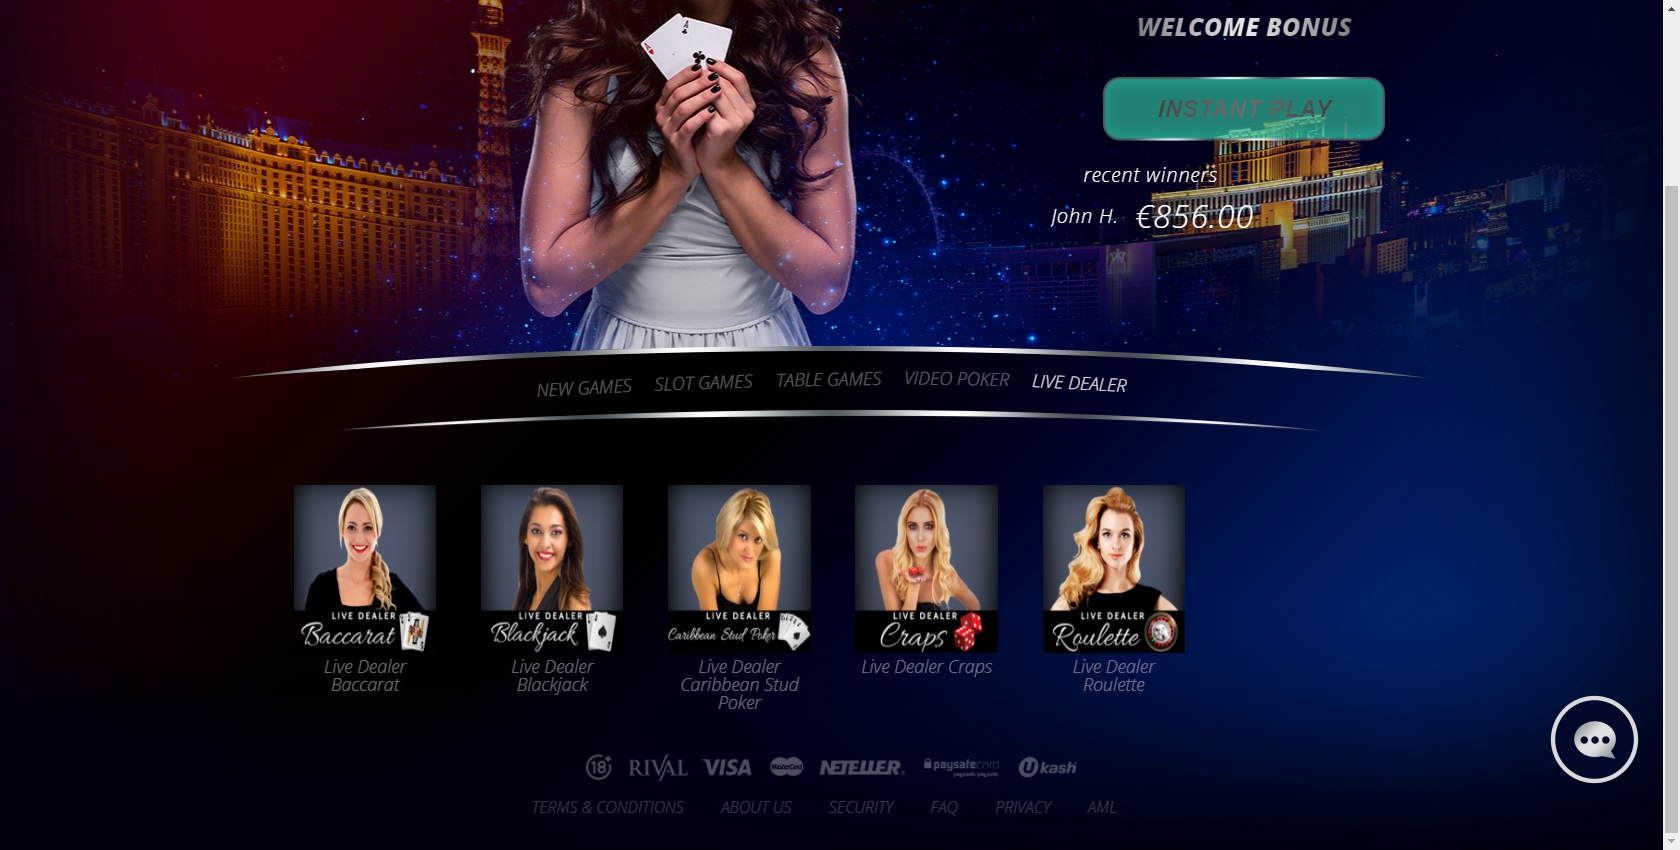 Always Vegas Casino Live Dealer Games